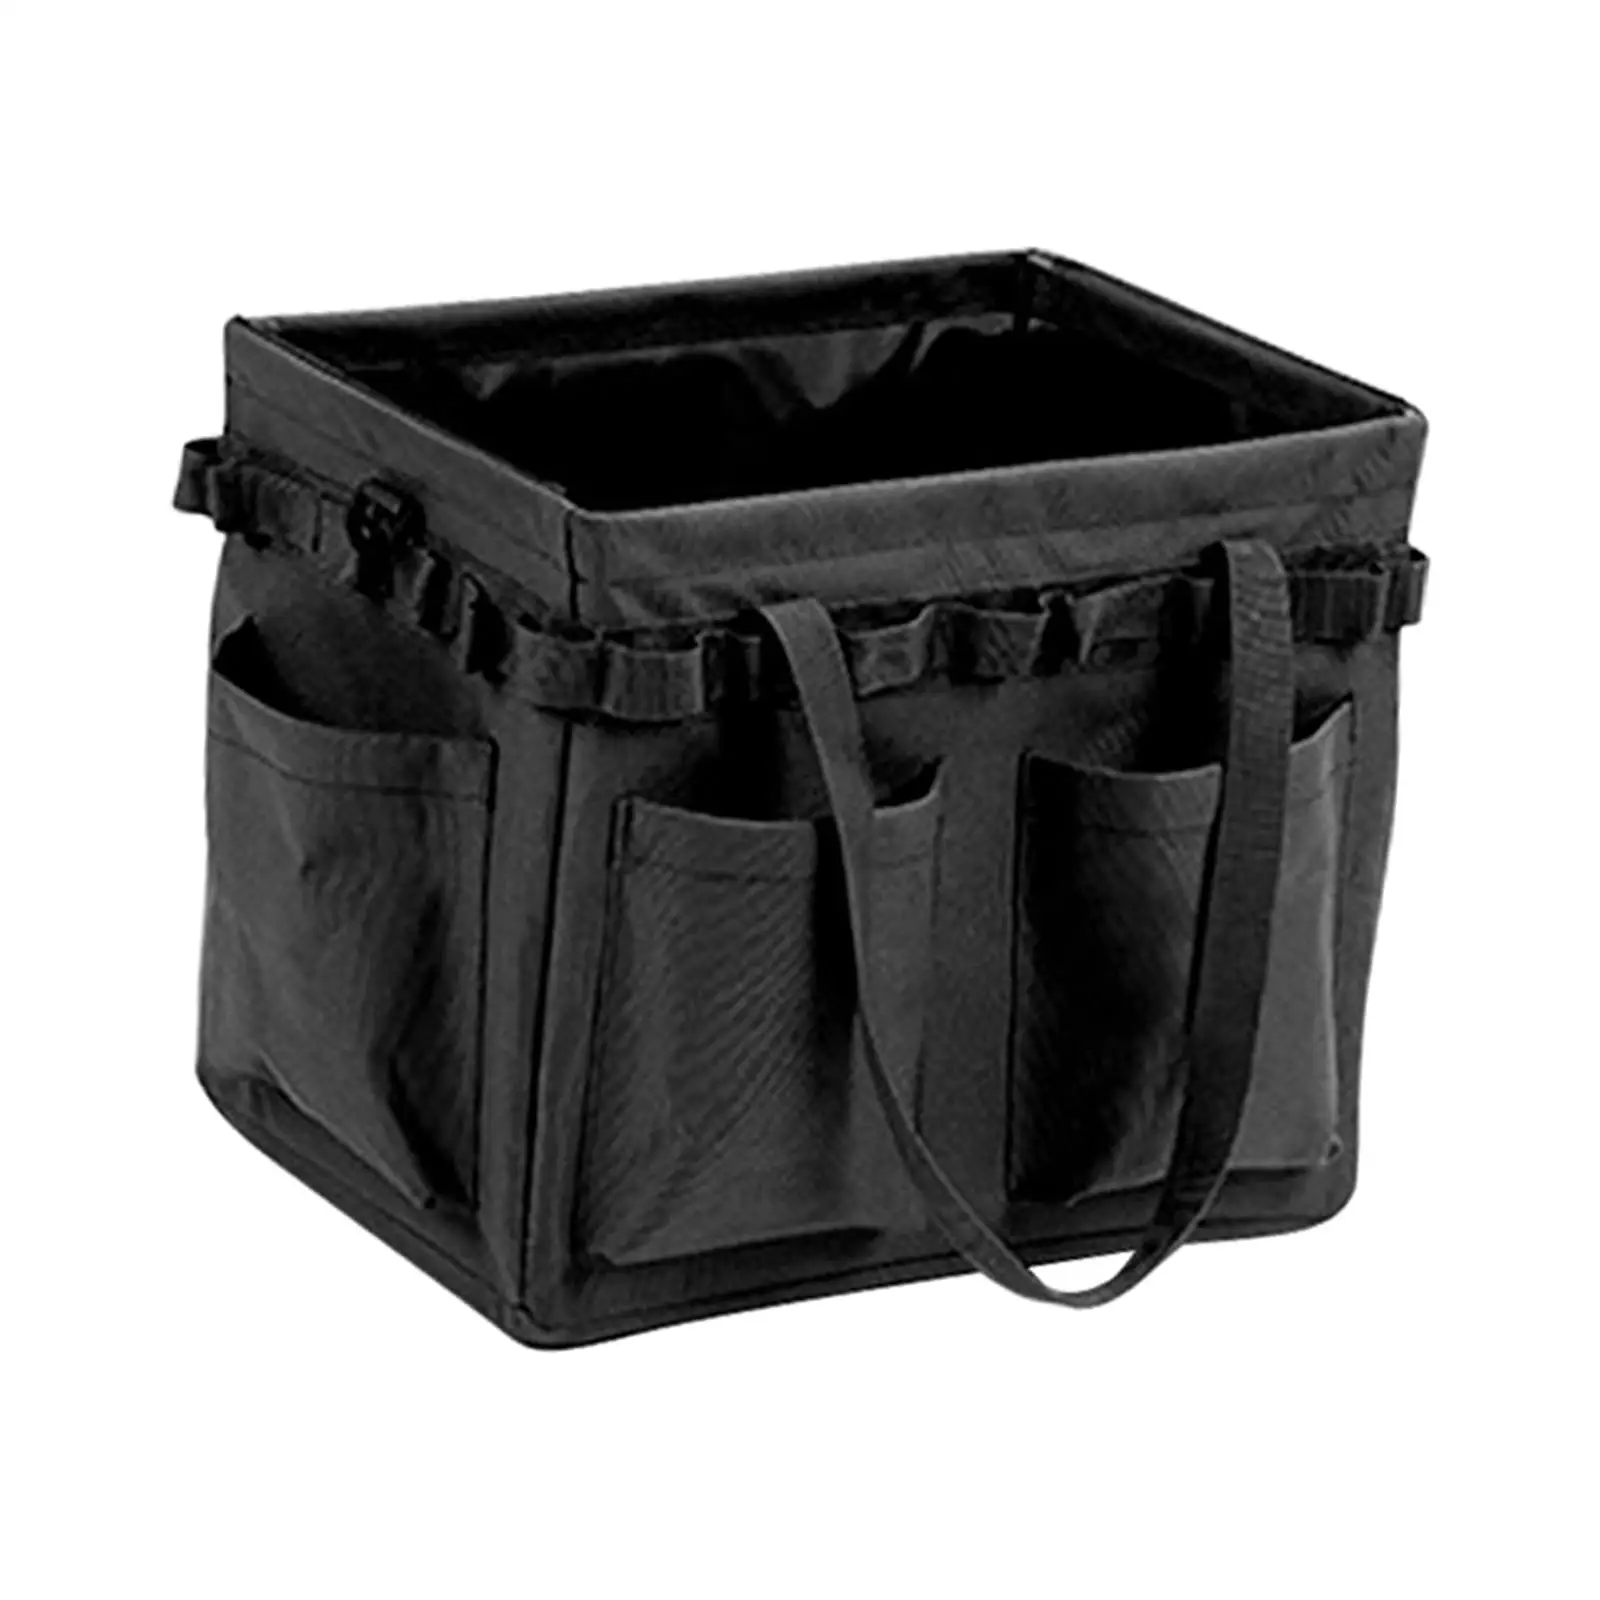 

Travel Duffel Tote Utility Tote Bag Handbag Wear Resistant Organizer Stuff Pouch Camping Gear Storage Bag for Trunk Garage